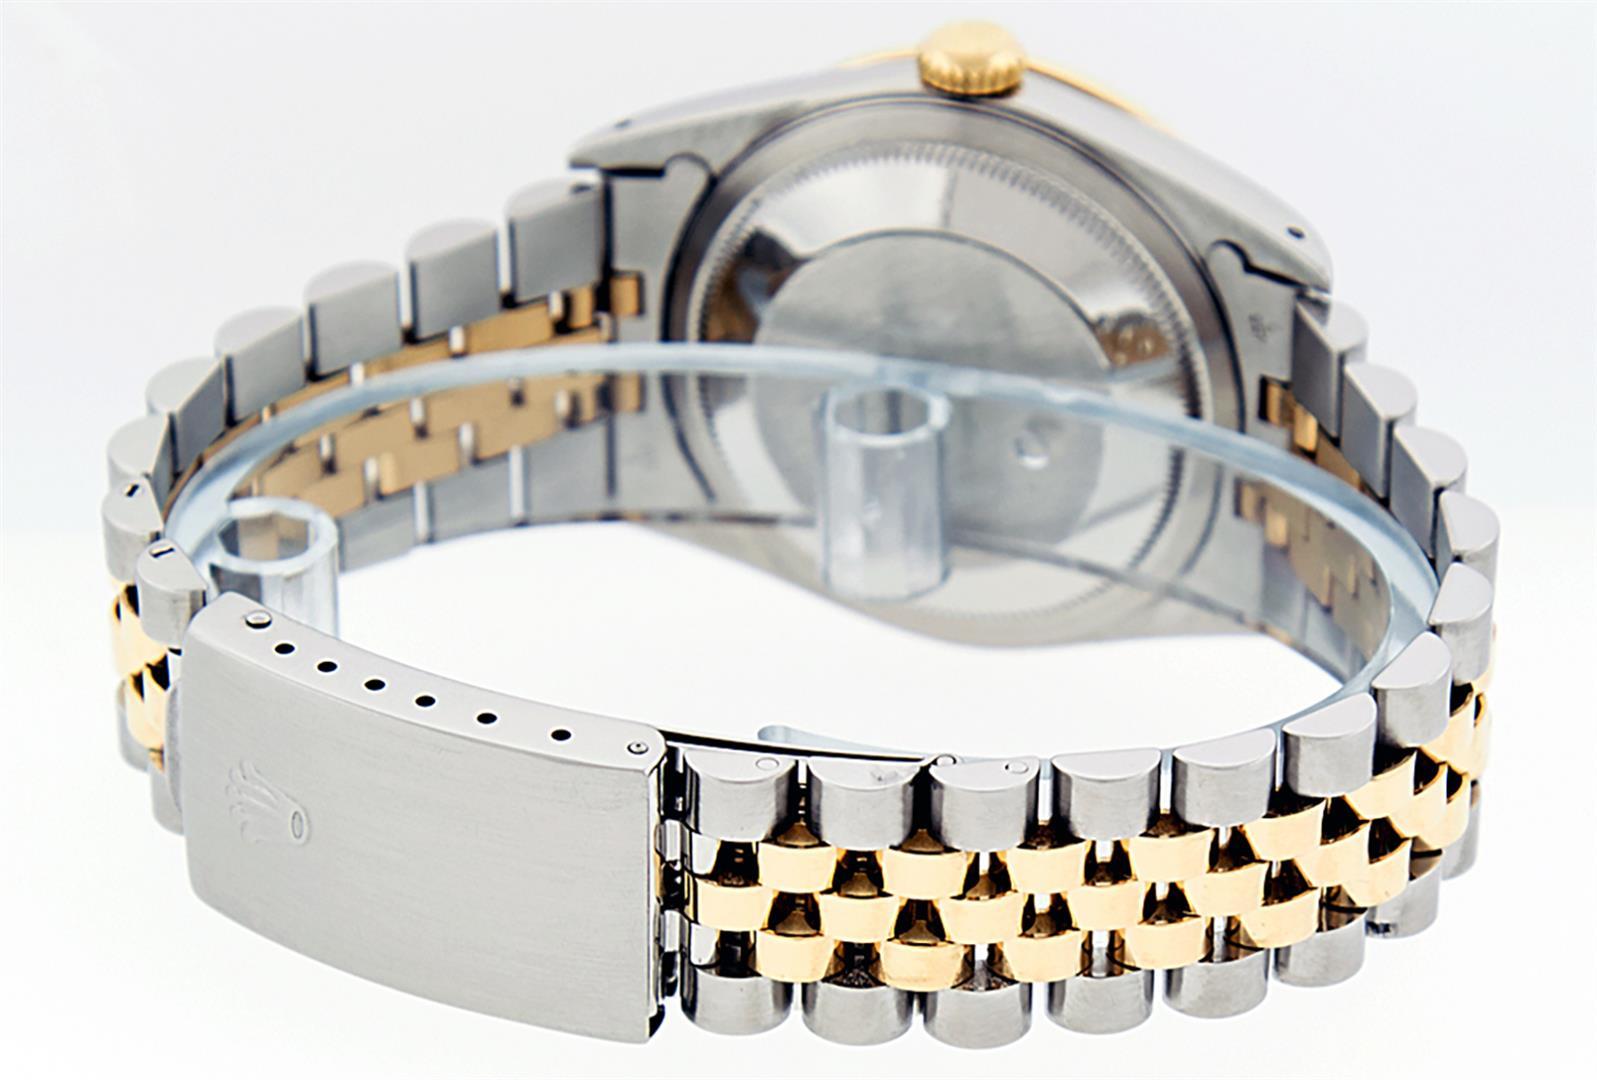 Rolex Mens Two Tone Black Diamond And Sapphire 36MM Datejust Wristwatch